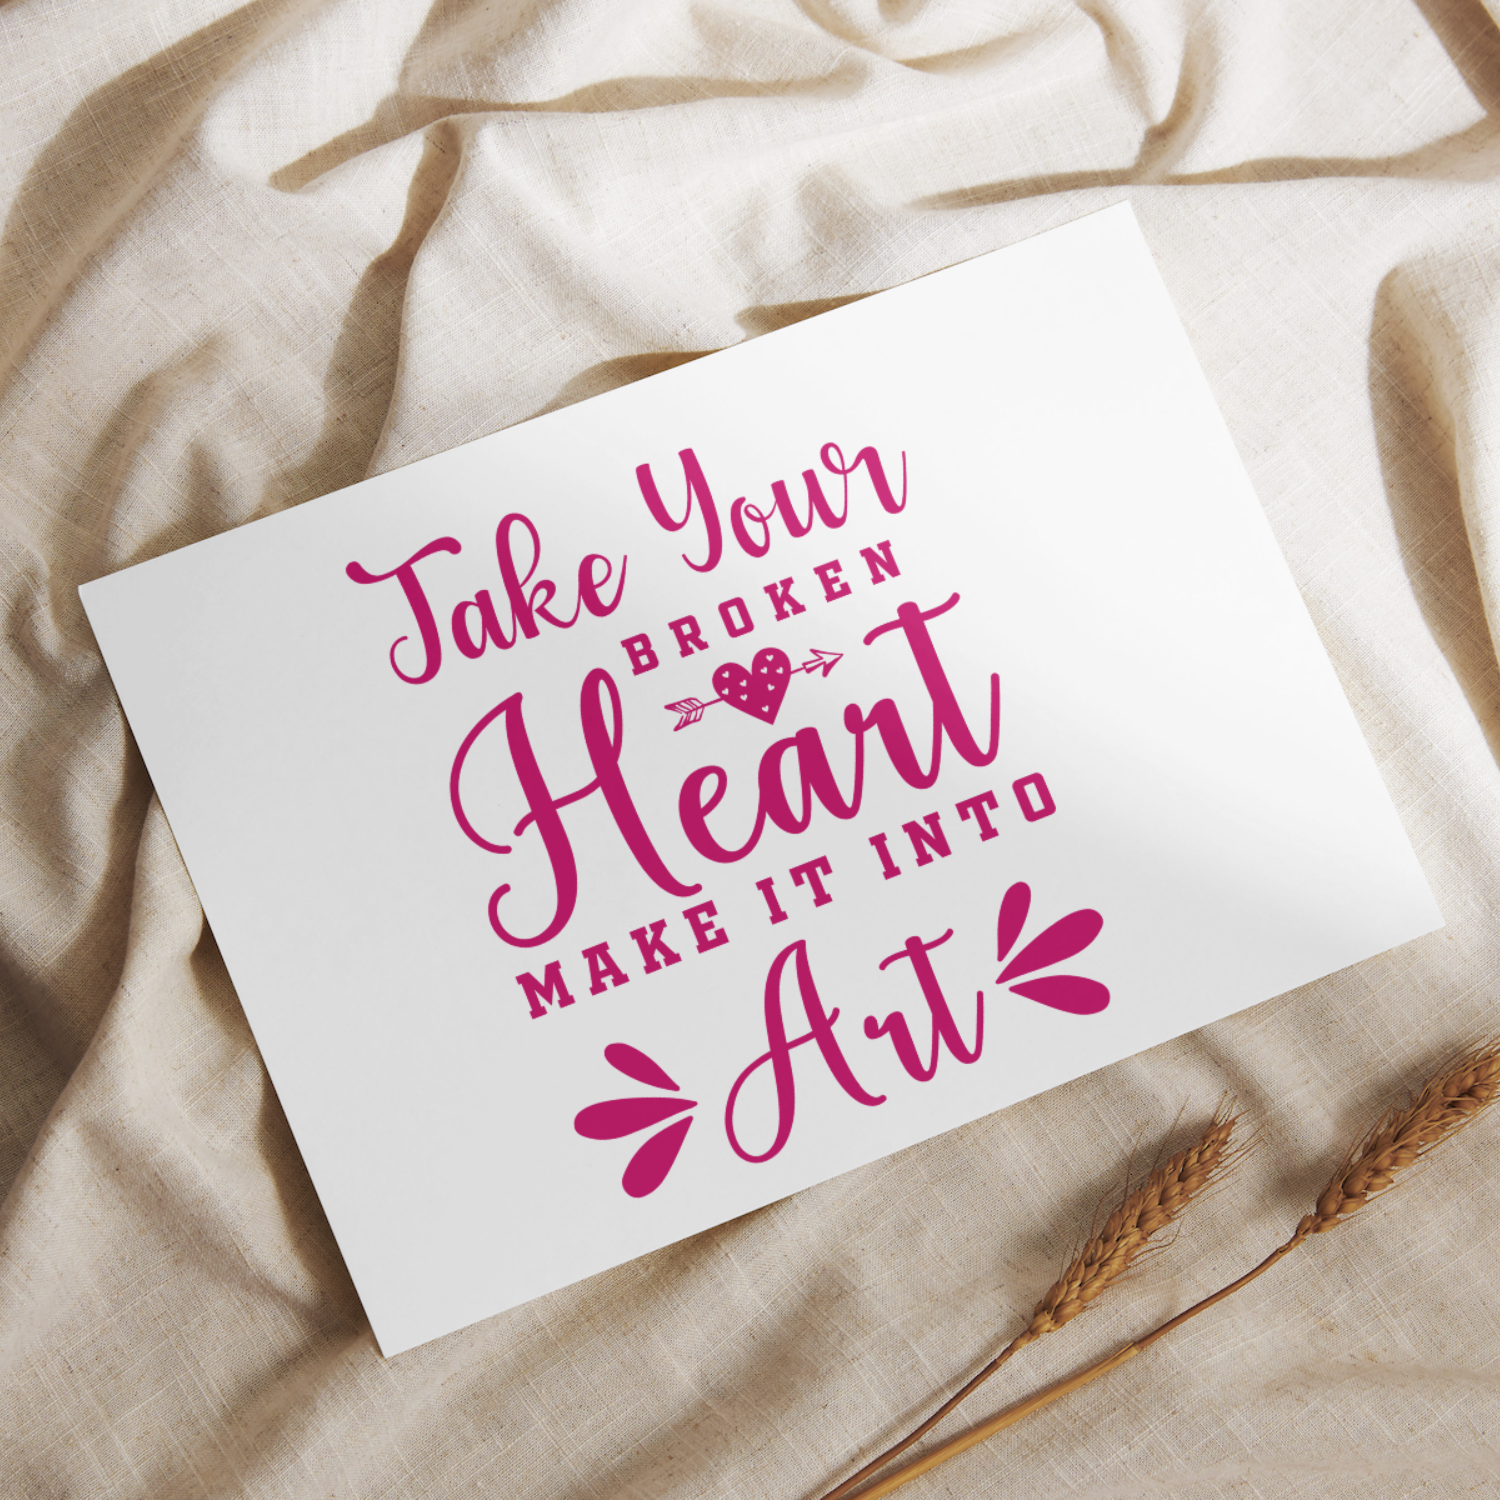 Take your broken heart make it into art SVG | Digital Download | Cut File | SVG Only The Sweet Stuff